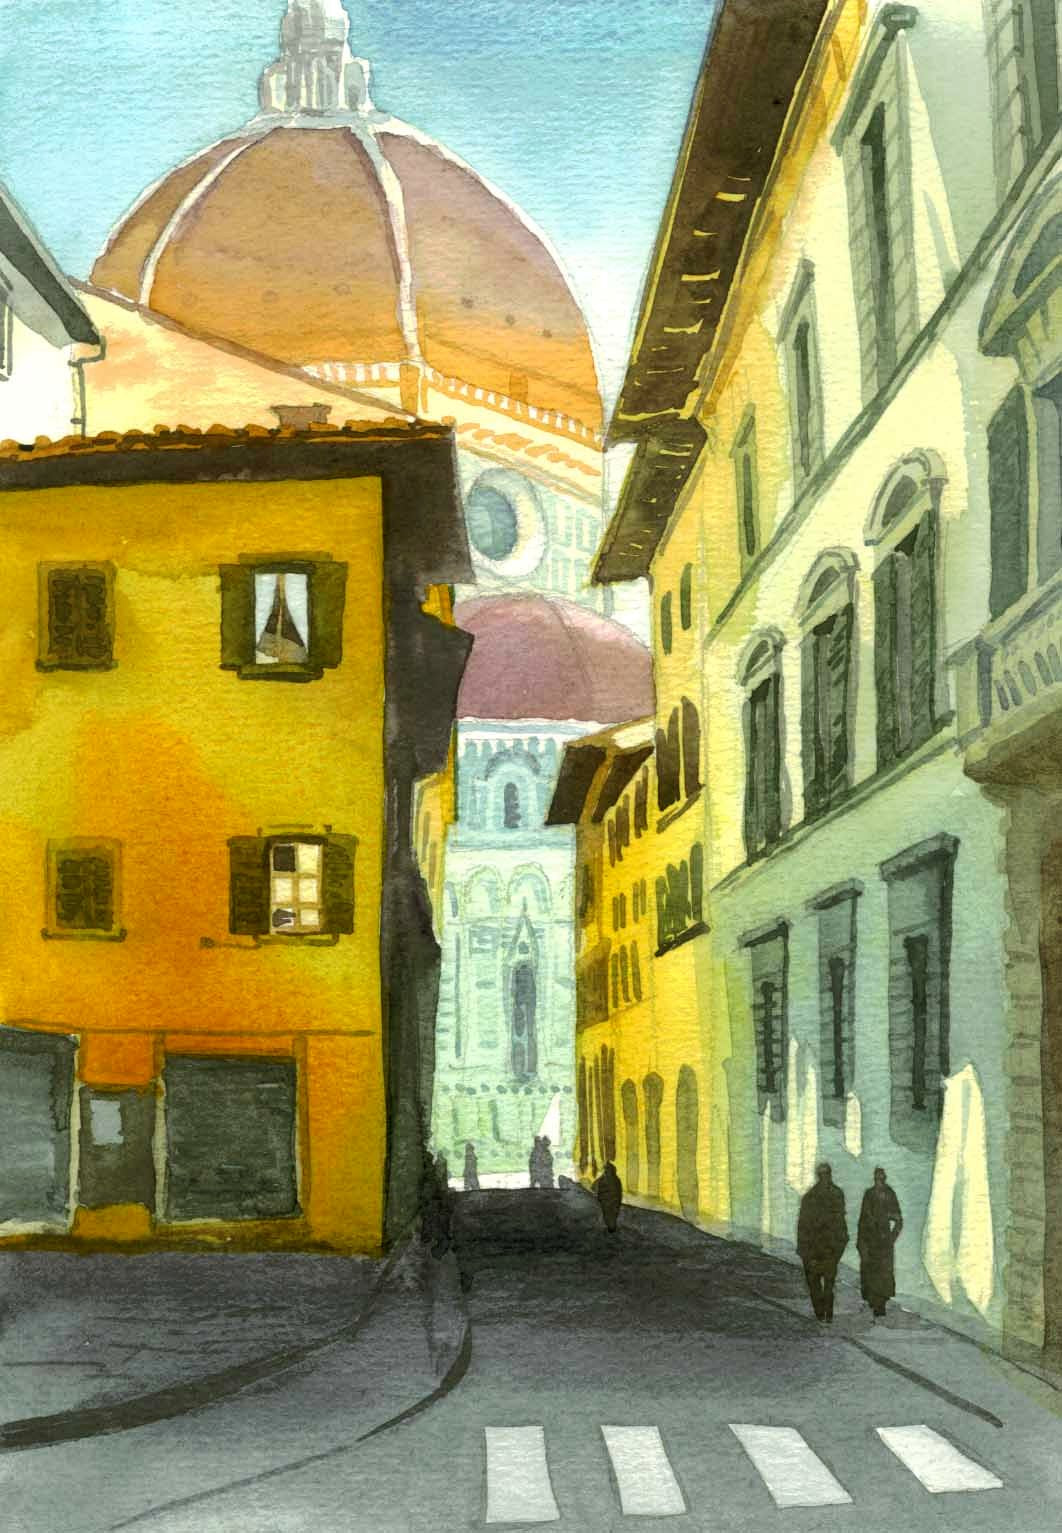 Duomo of Florence (Giclée Print)